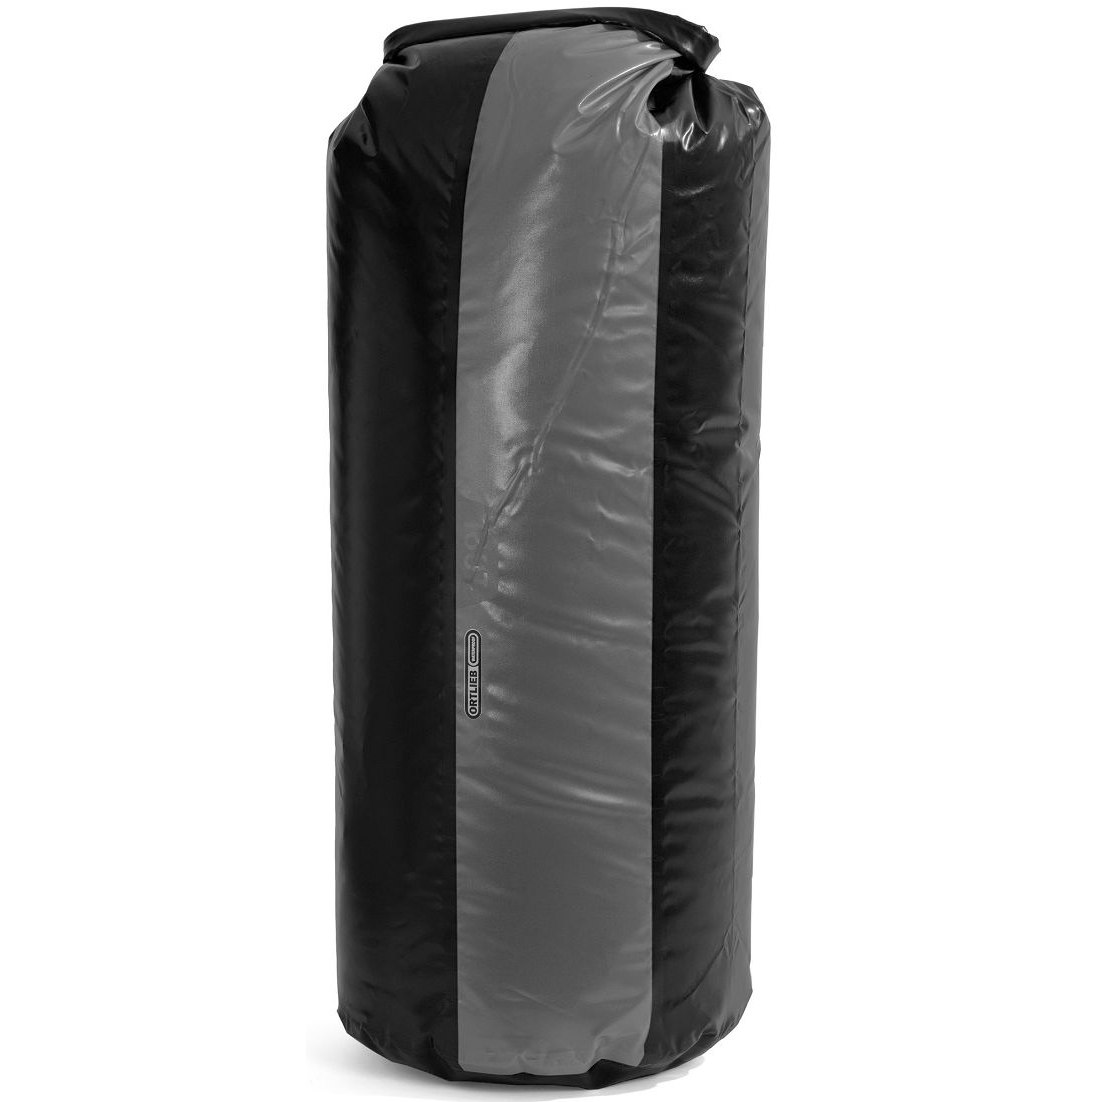 Bild von ORTLIEB Dry-Bag PD350 - 109L Packsack - black-slate